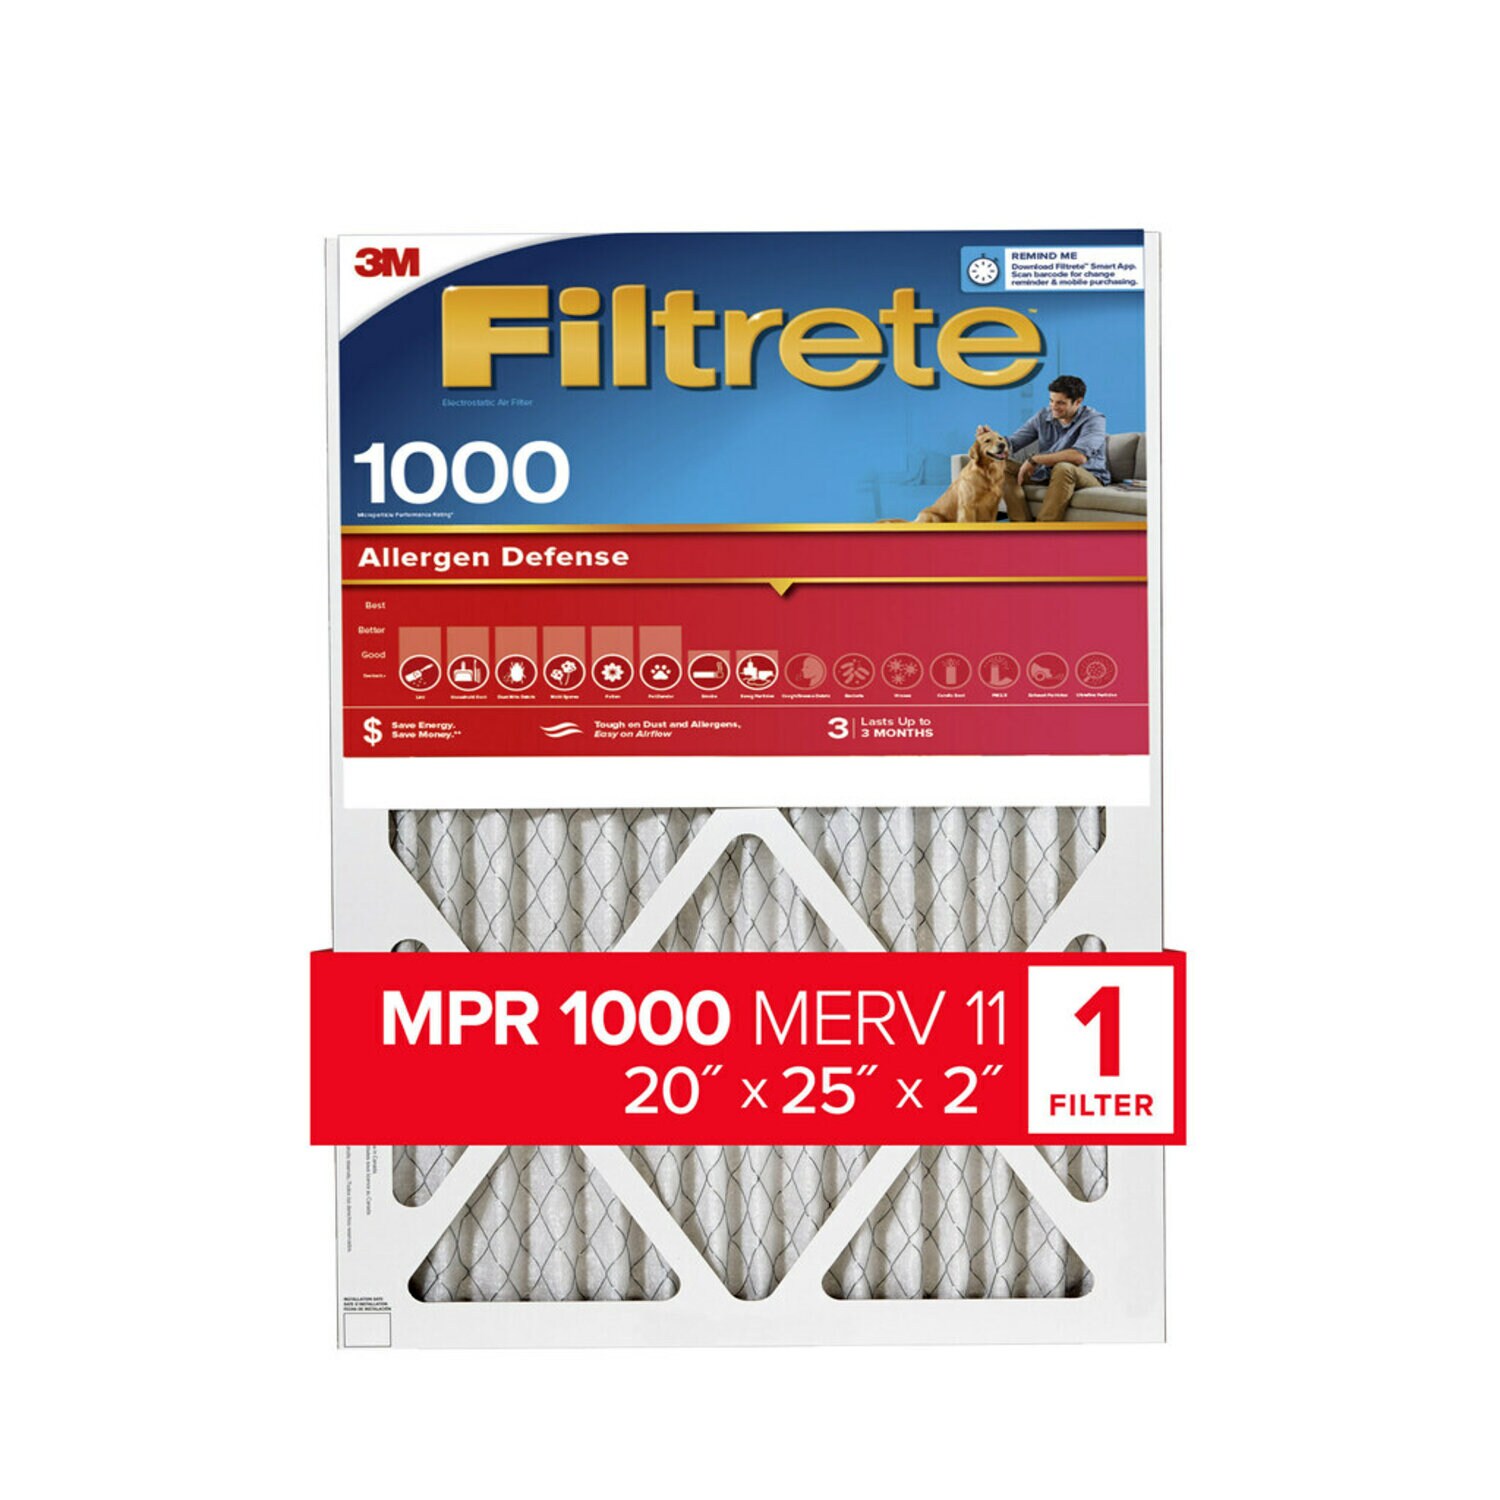 7100270578 - Filtrete Electrostatic Air Filter 1000 MPR NADP03-2IN-4, 20 in x 25 in x 2 in (50.8 cm x 63.5 cm x 5 cm)